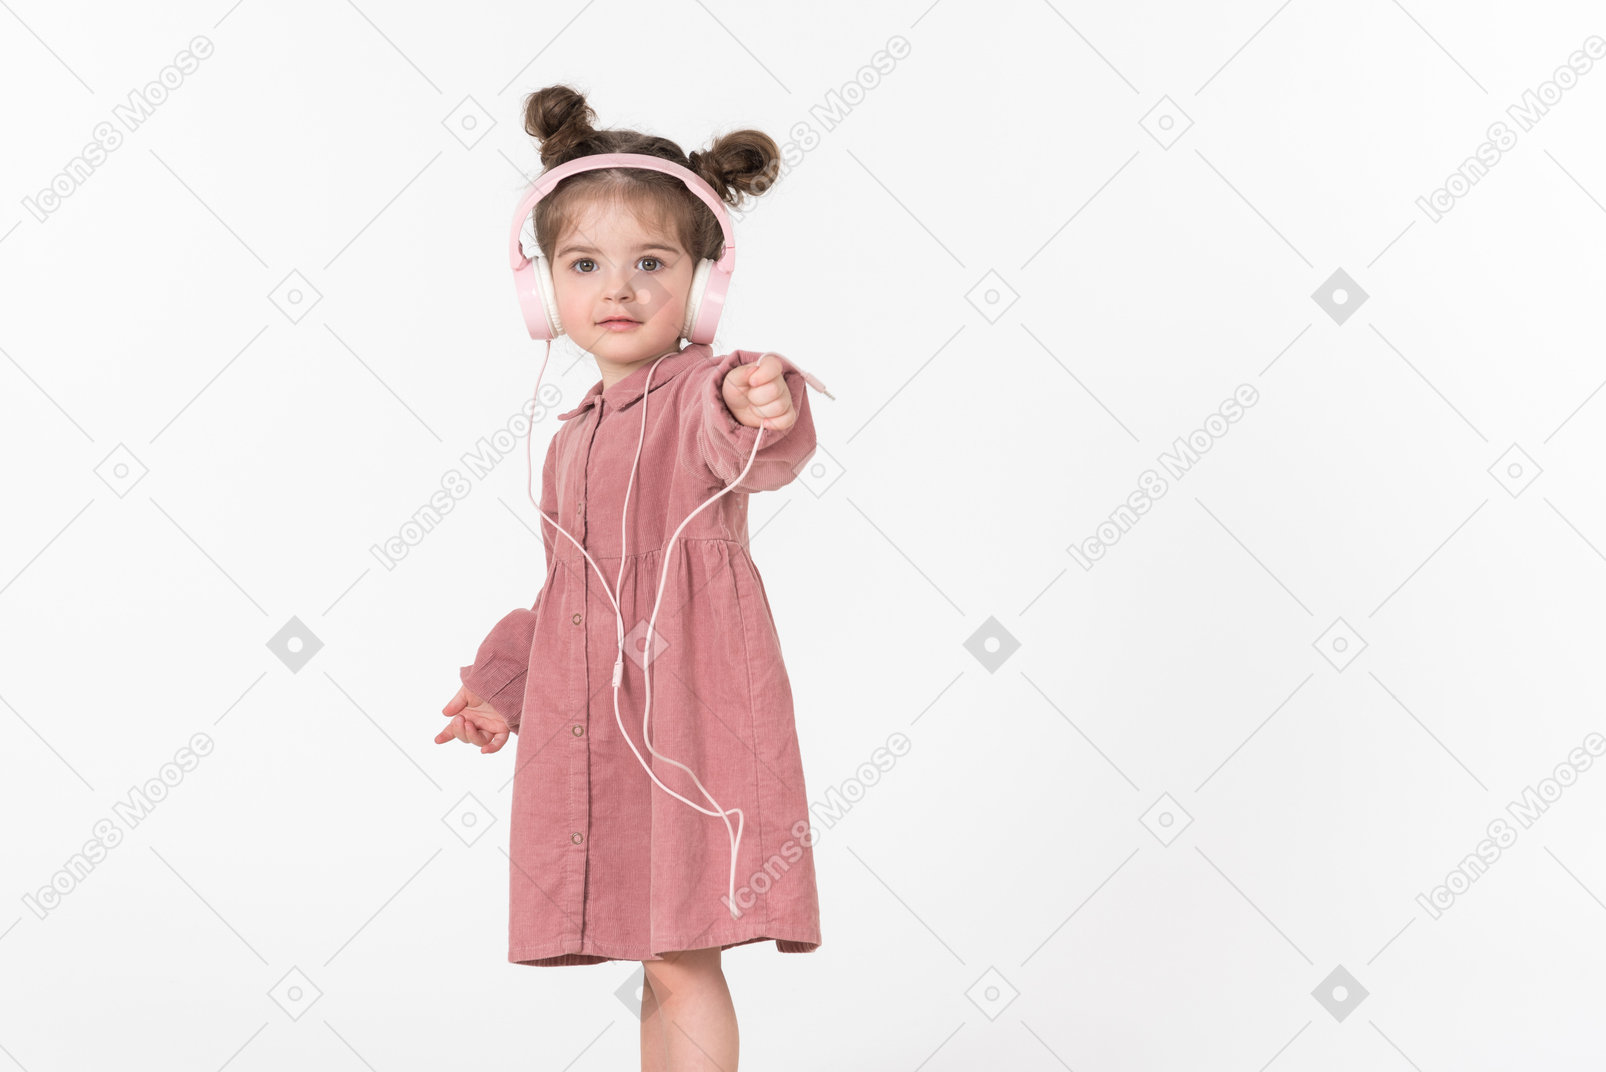 Little girl wearing headphones pointing forward